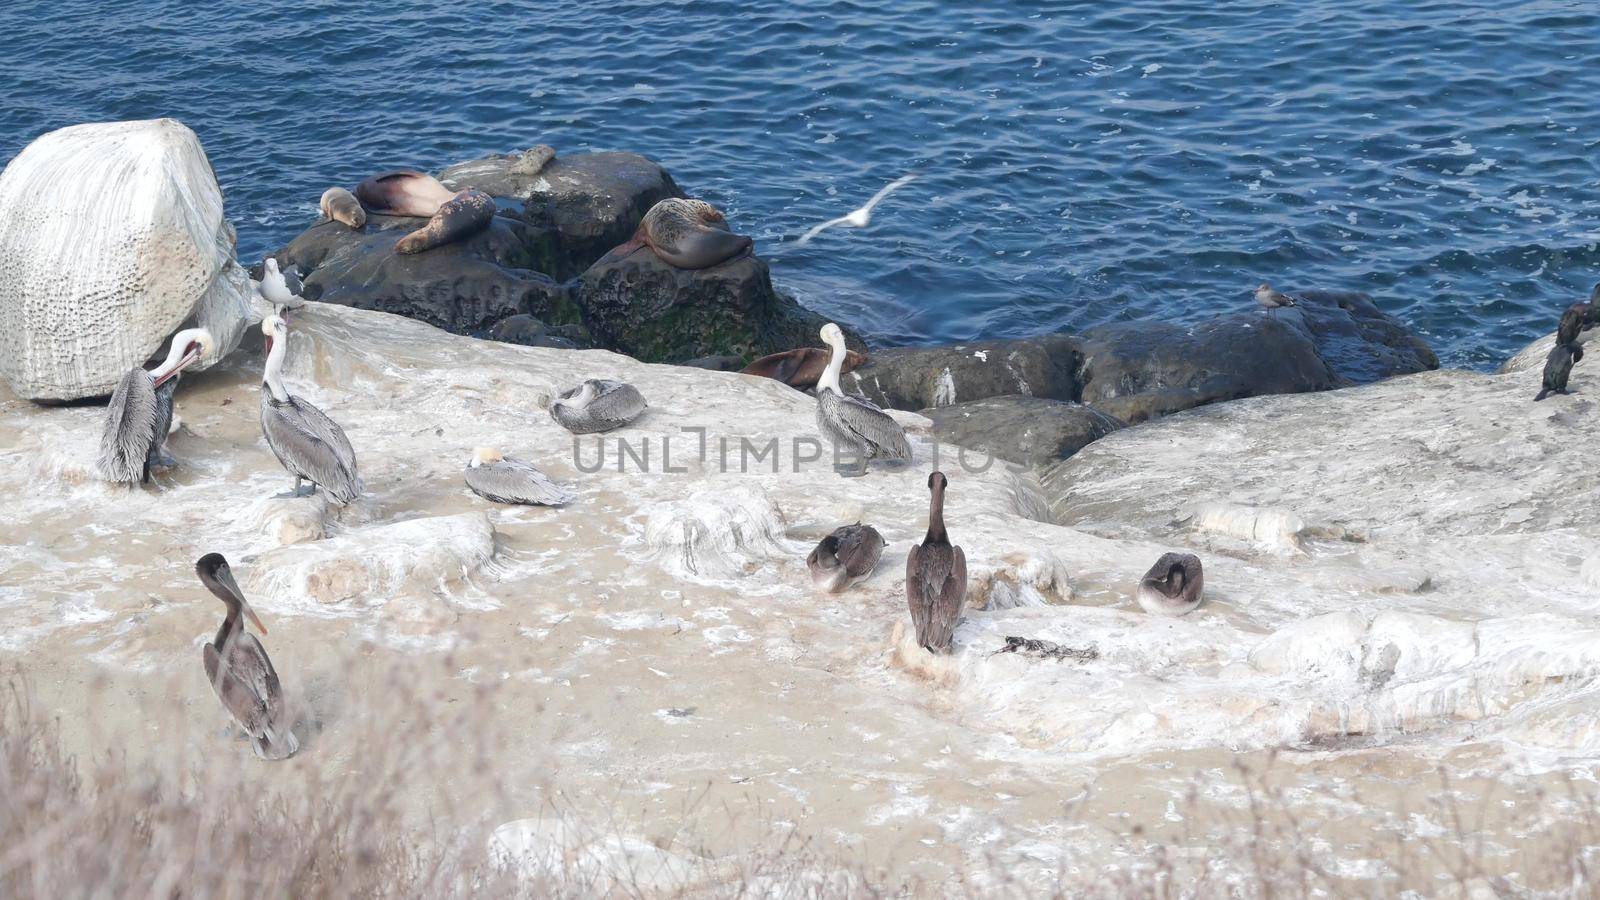 Brown pelican flock or colony of pelecanus birds, seal or sea lions on rock by ocean water, La Jolla cove wildlife, California coast, USA. Avian animal, fauna in natural habitat or freedom on cliff.